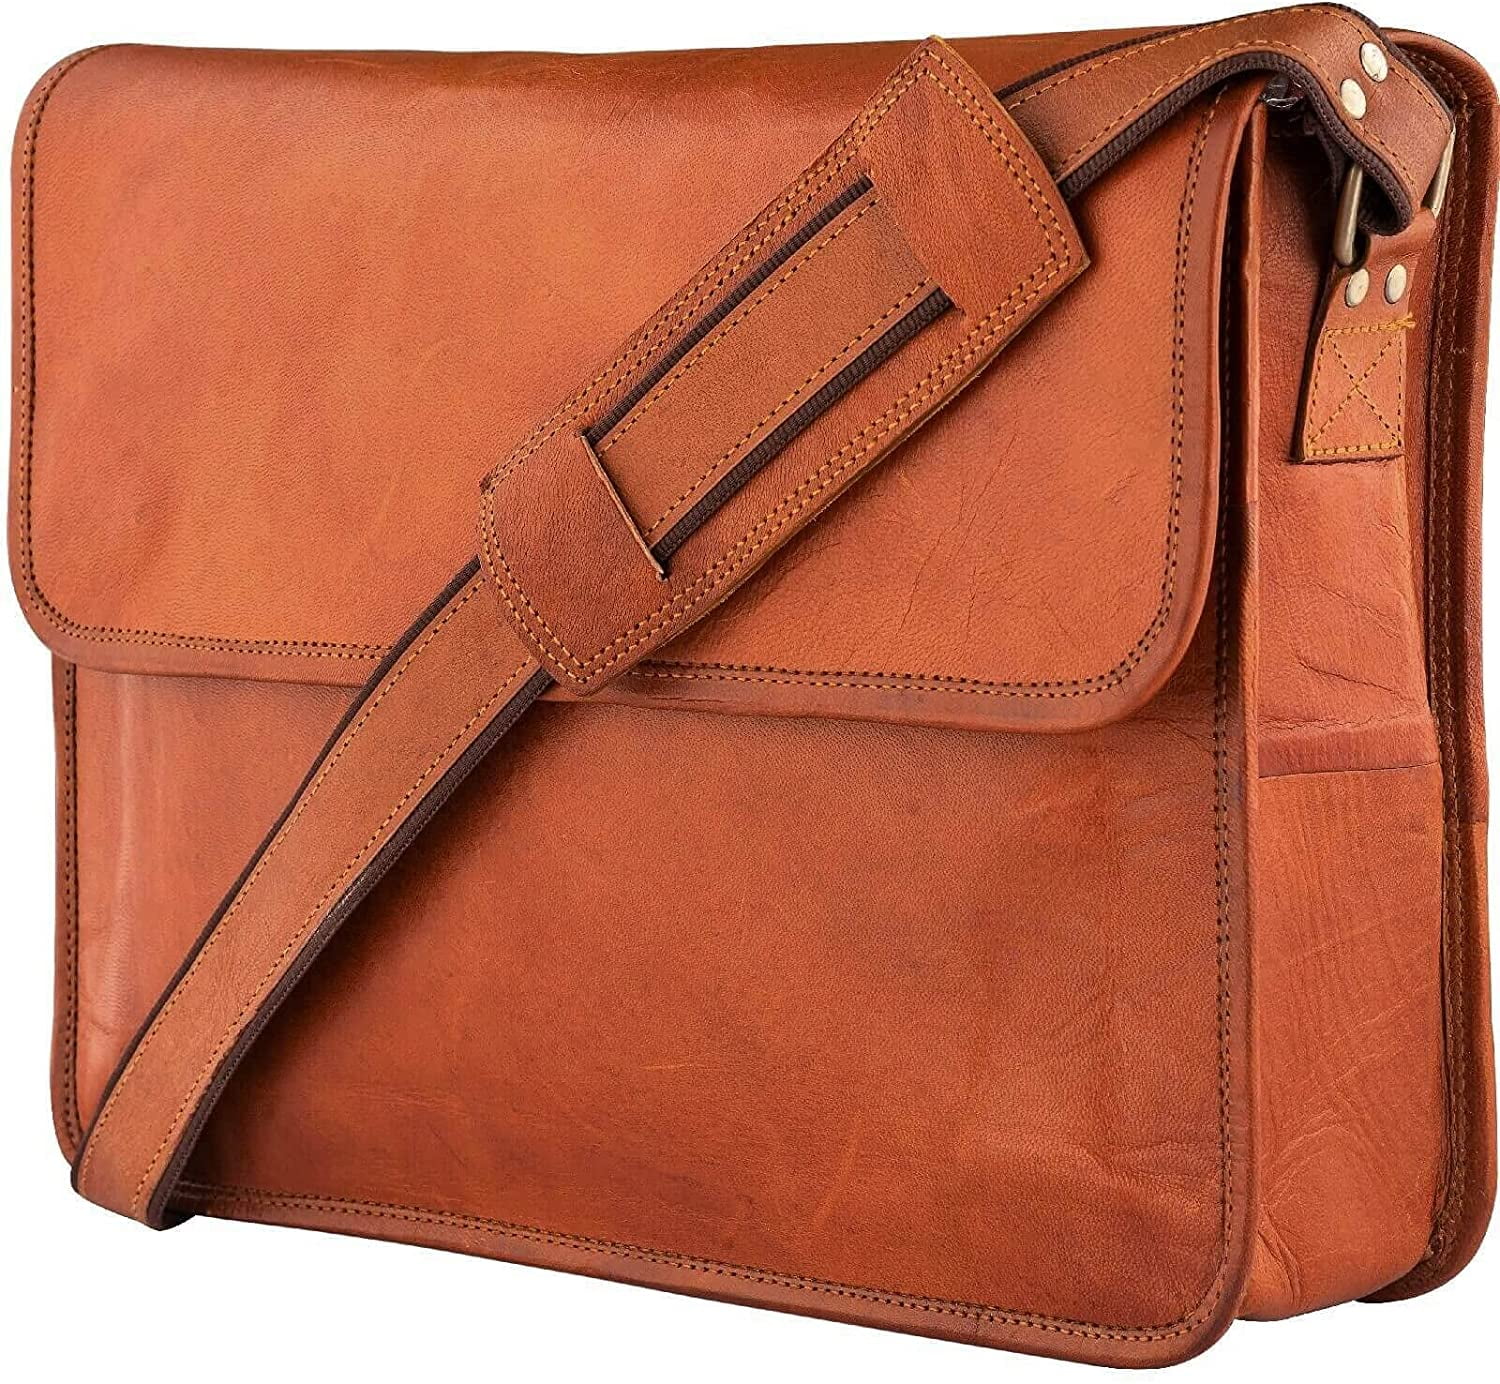 Leather Messenger Bag for Men & Women Offie Briefcase Laptop Satchel Bags 